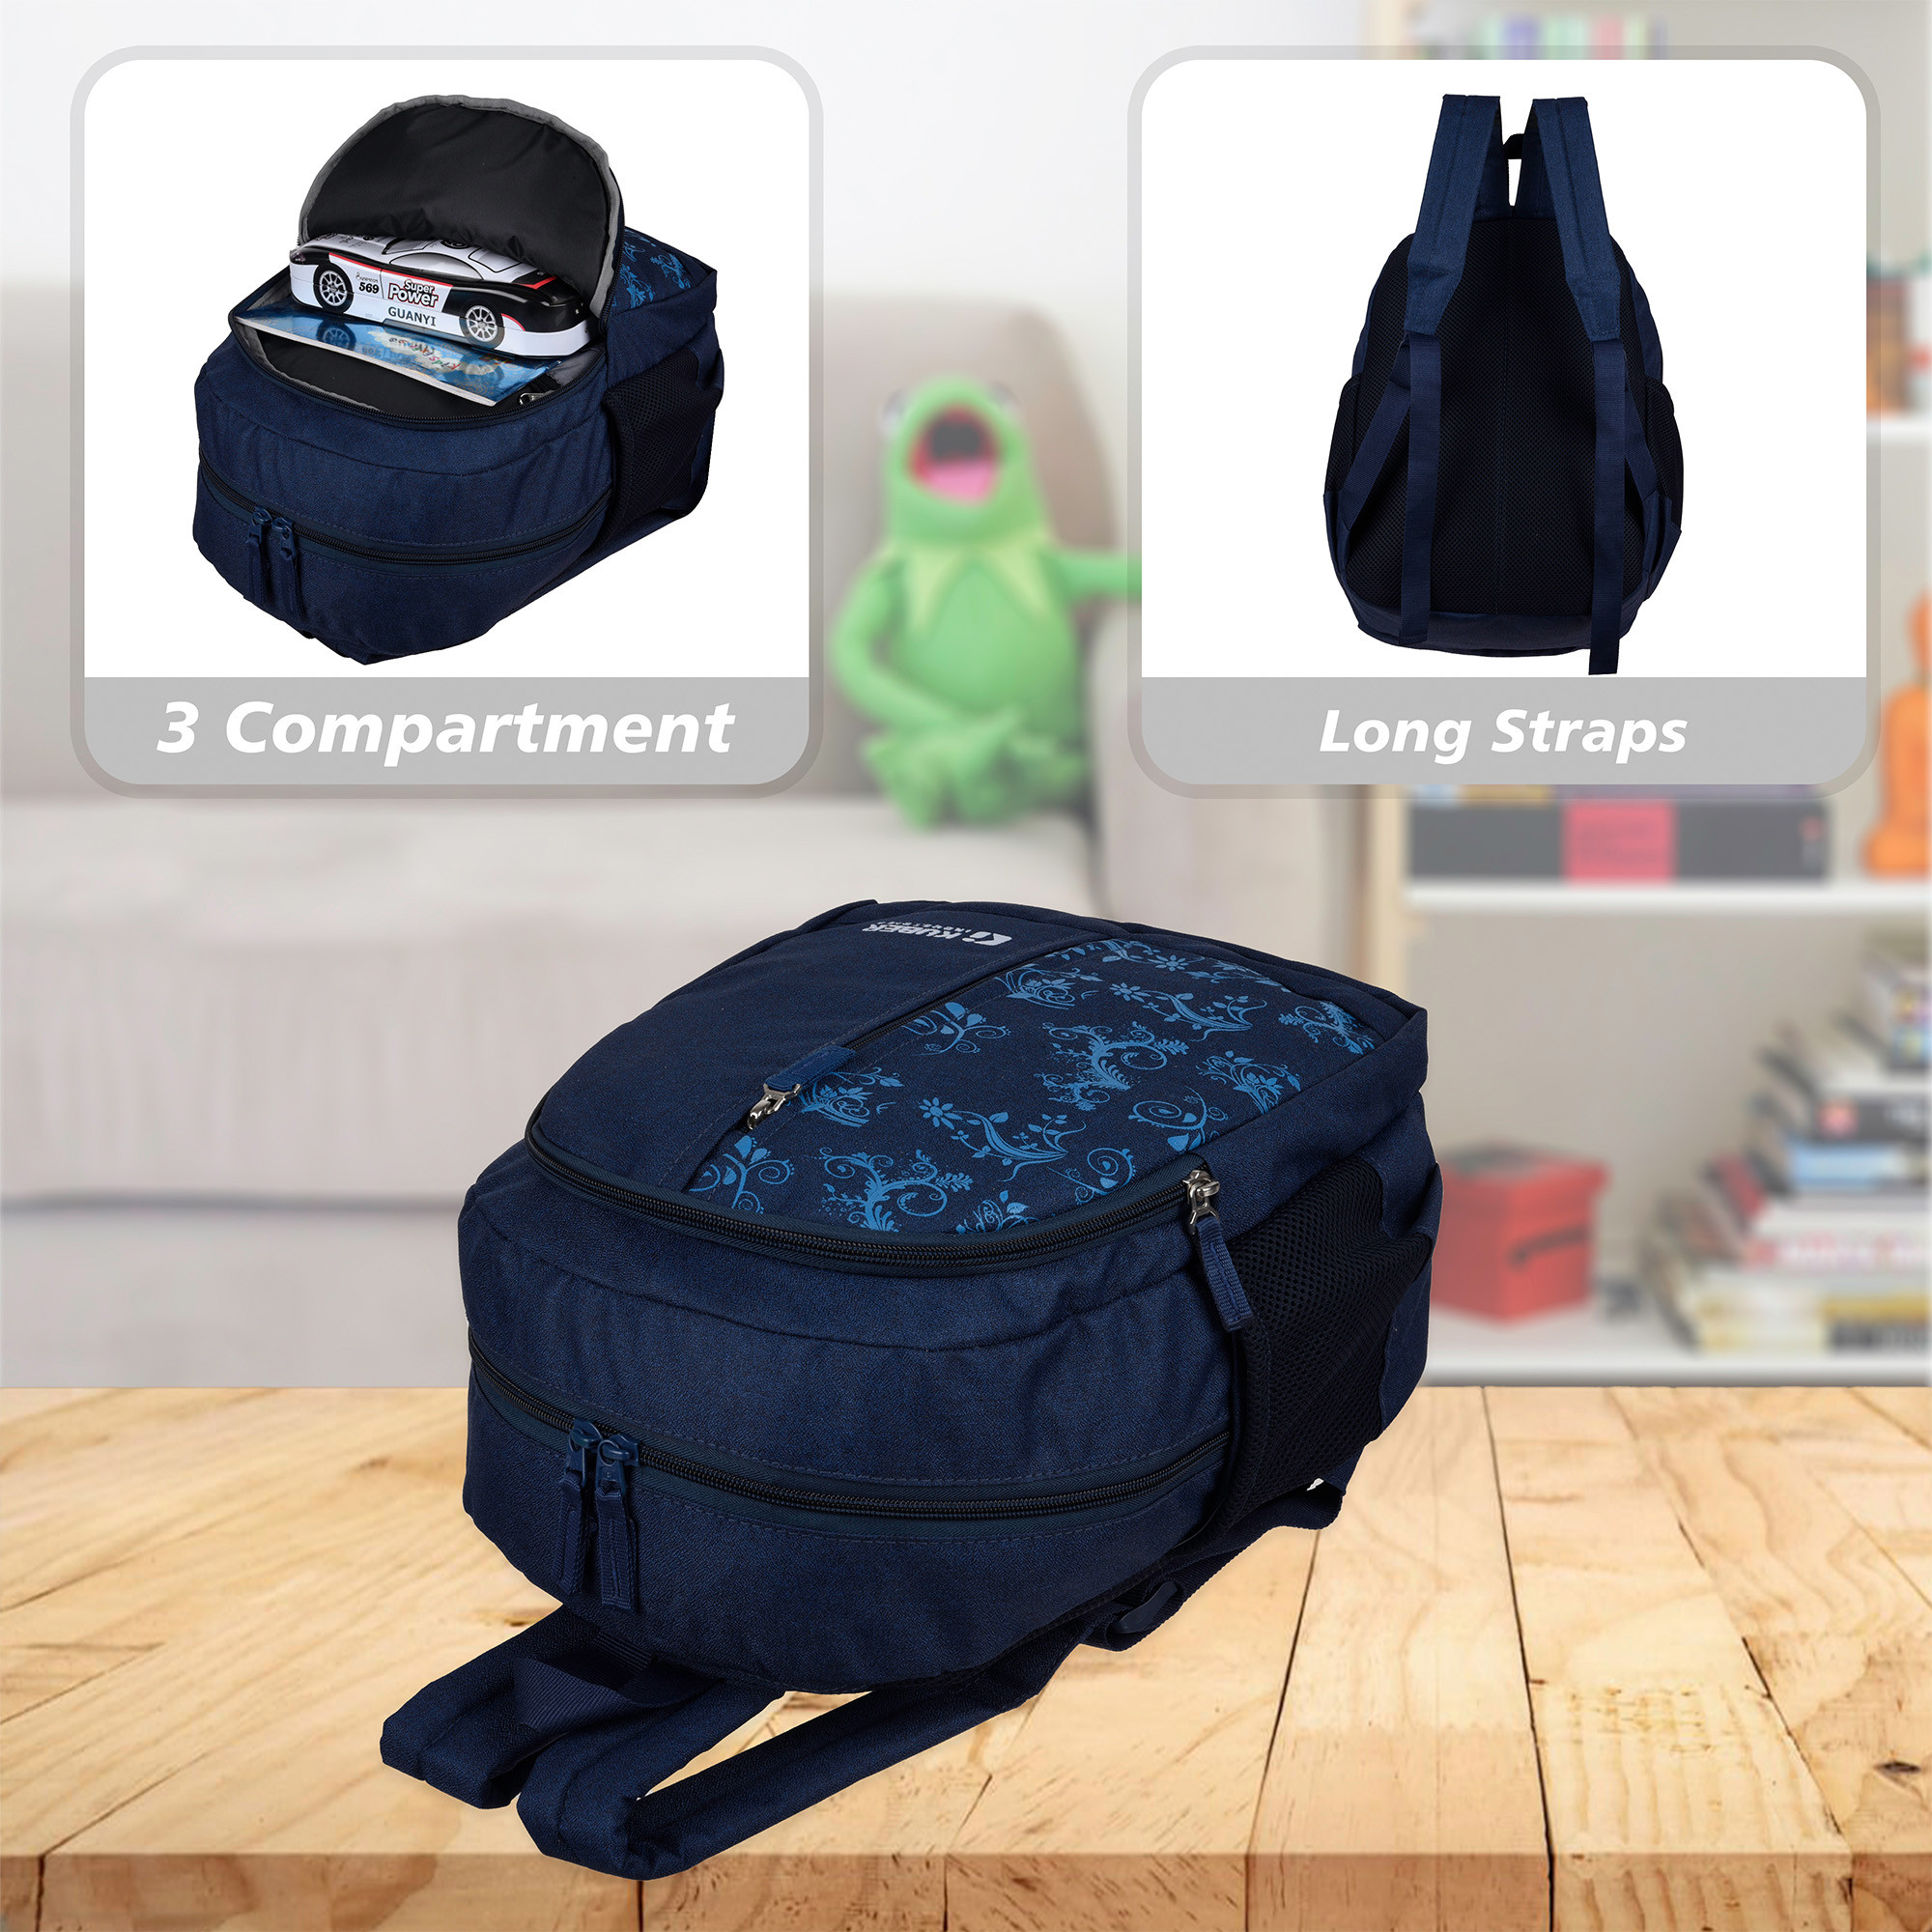 Kuber Industries Backpack | School Backpack for Kids | Collage Backpack | School Bag for Boys & Girls | 3 Compartments Mini Backpack | Half Print School Bag | Navy Blue